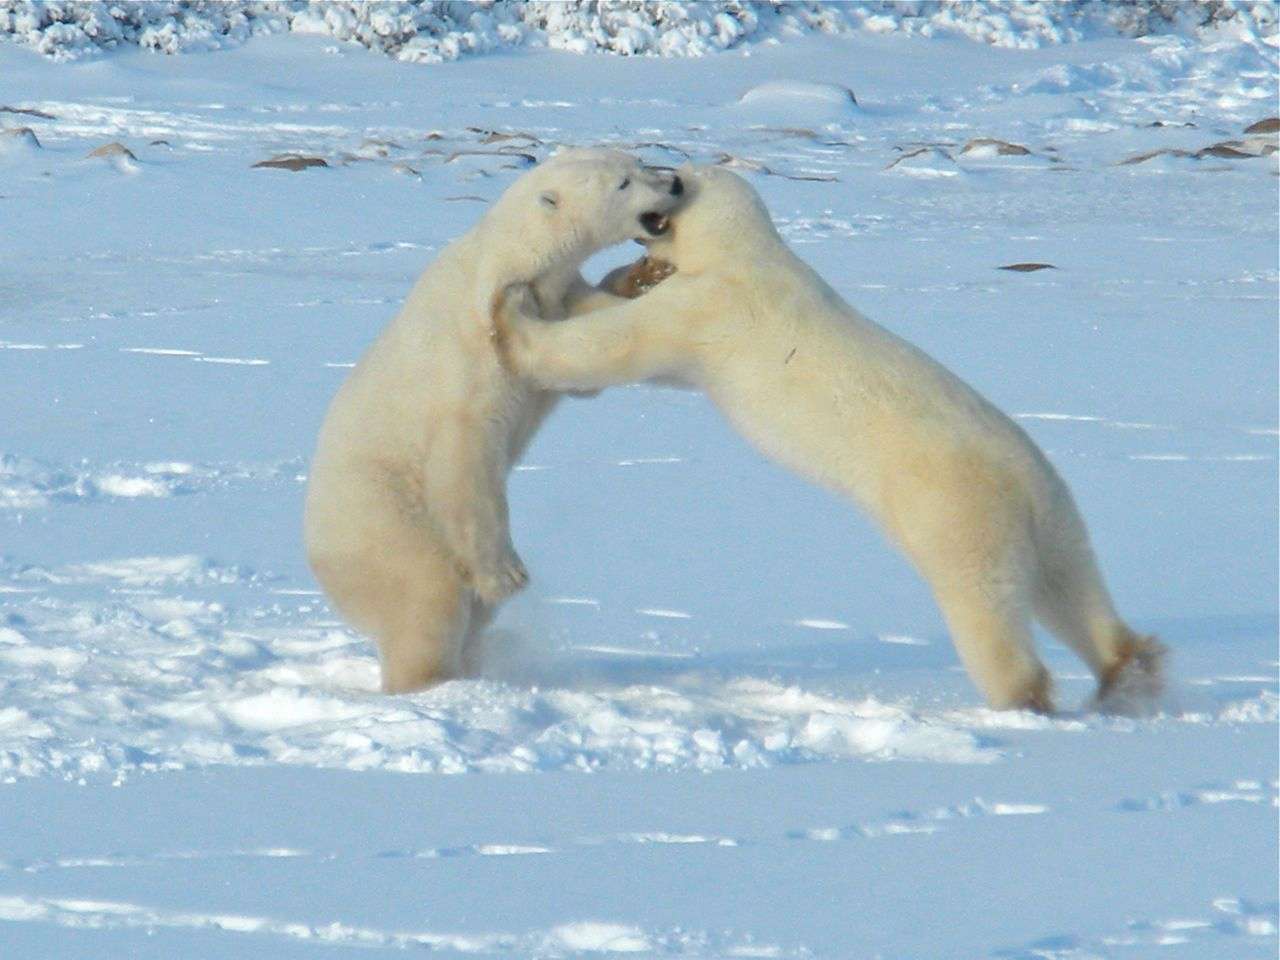 Polar Bears Play-Fighting